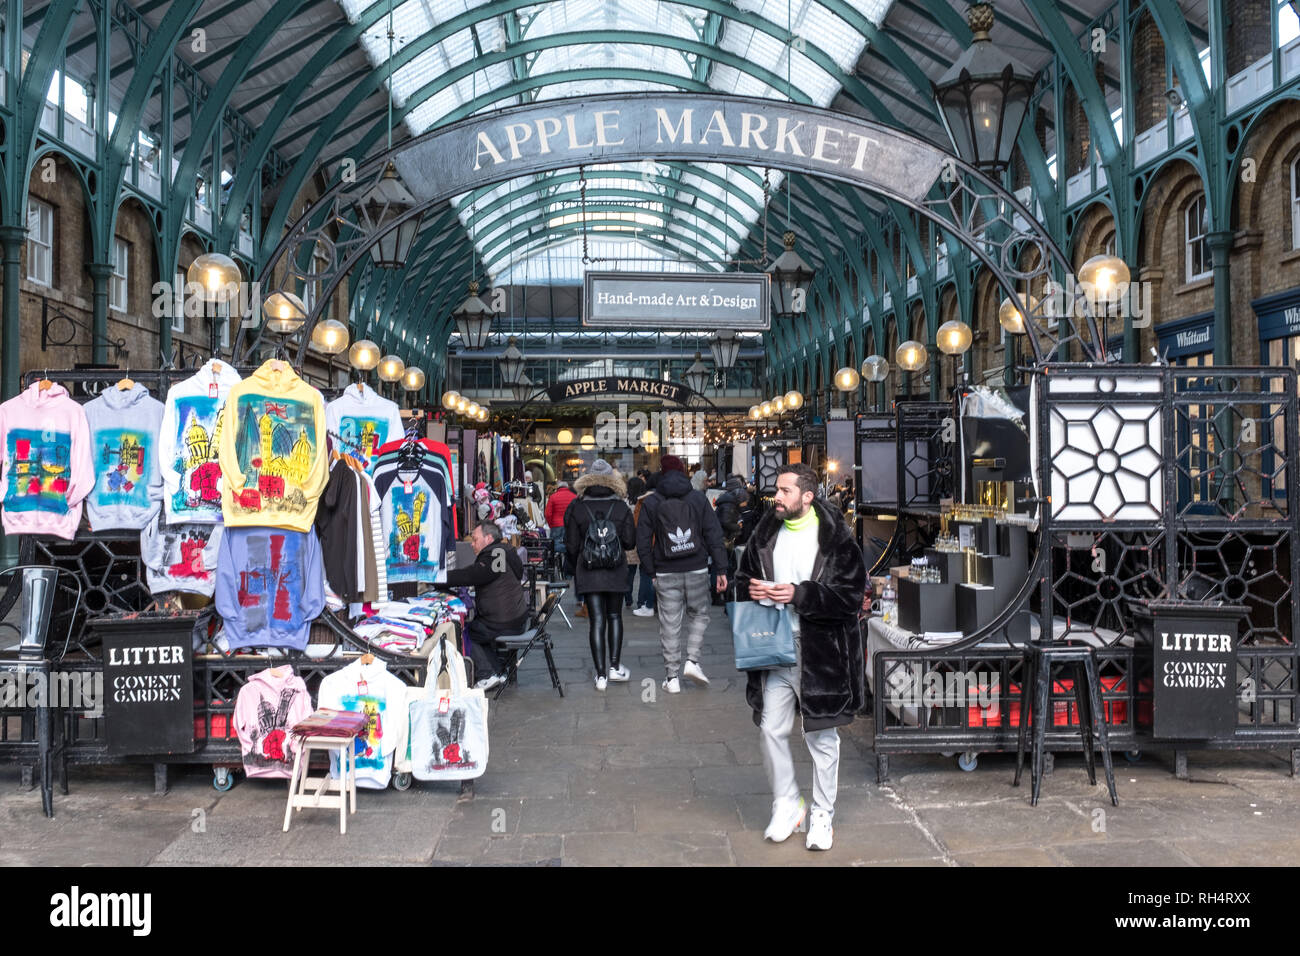 Shopping at Apple Market, Covent Garden, London, UK Stock Photo